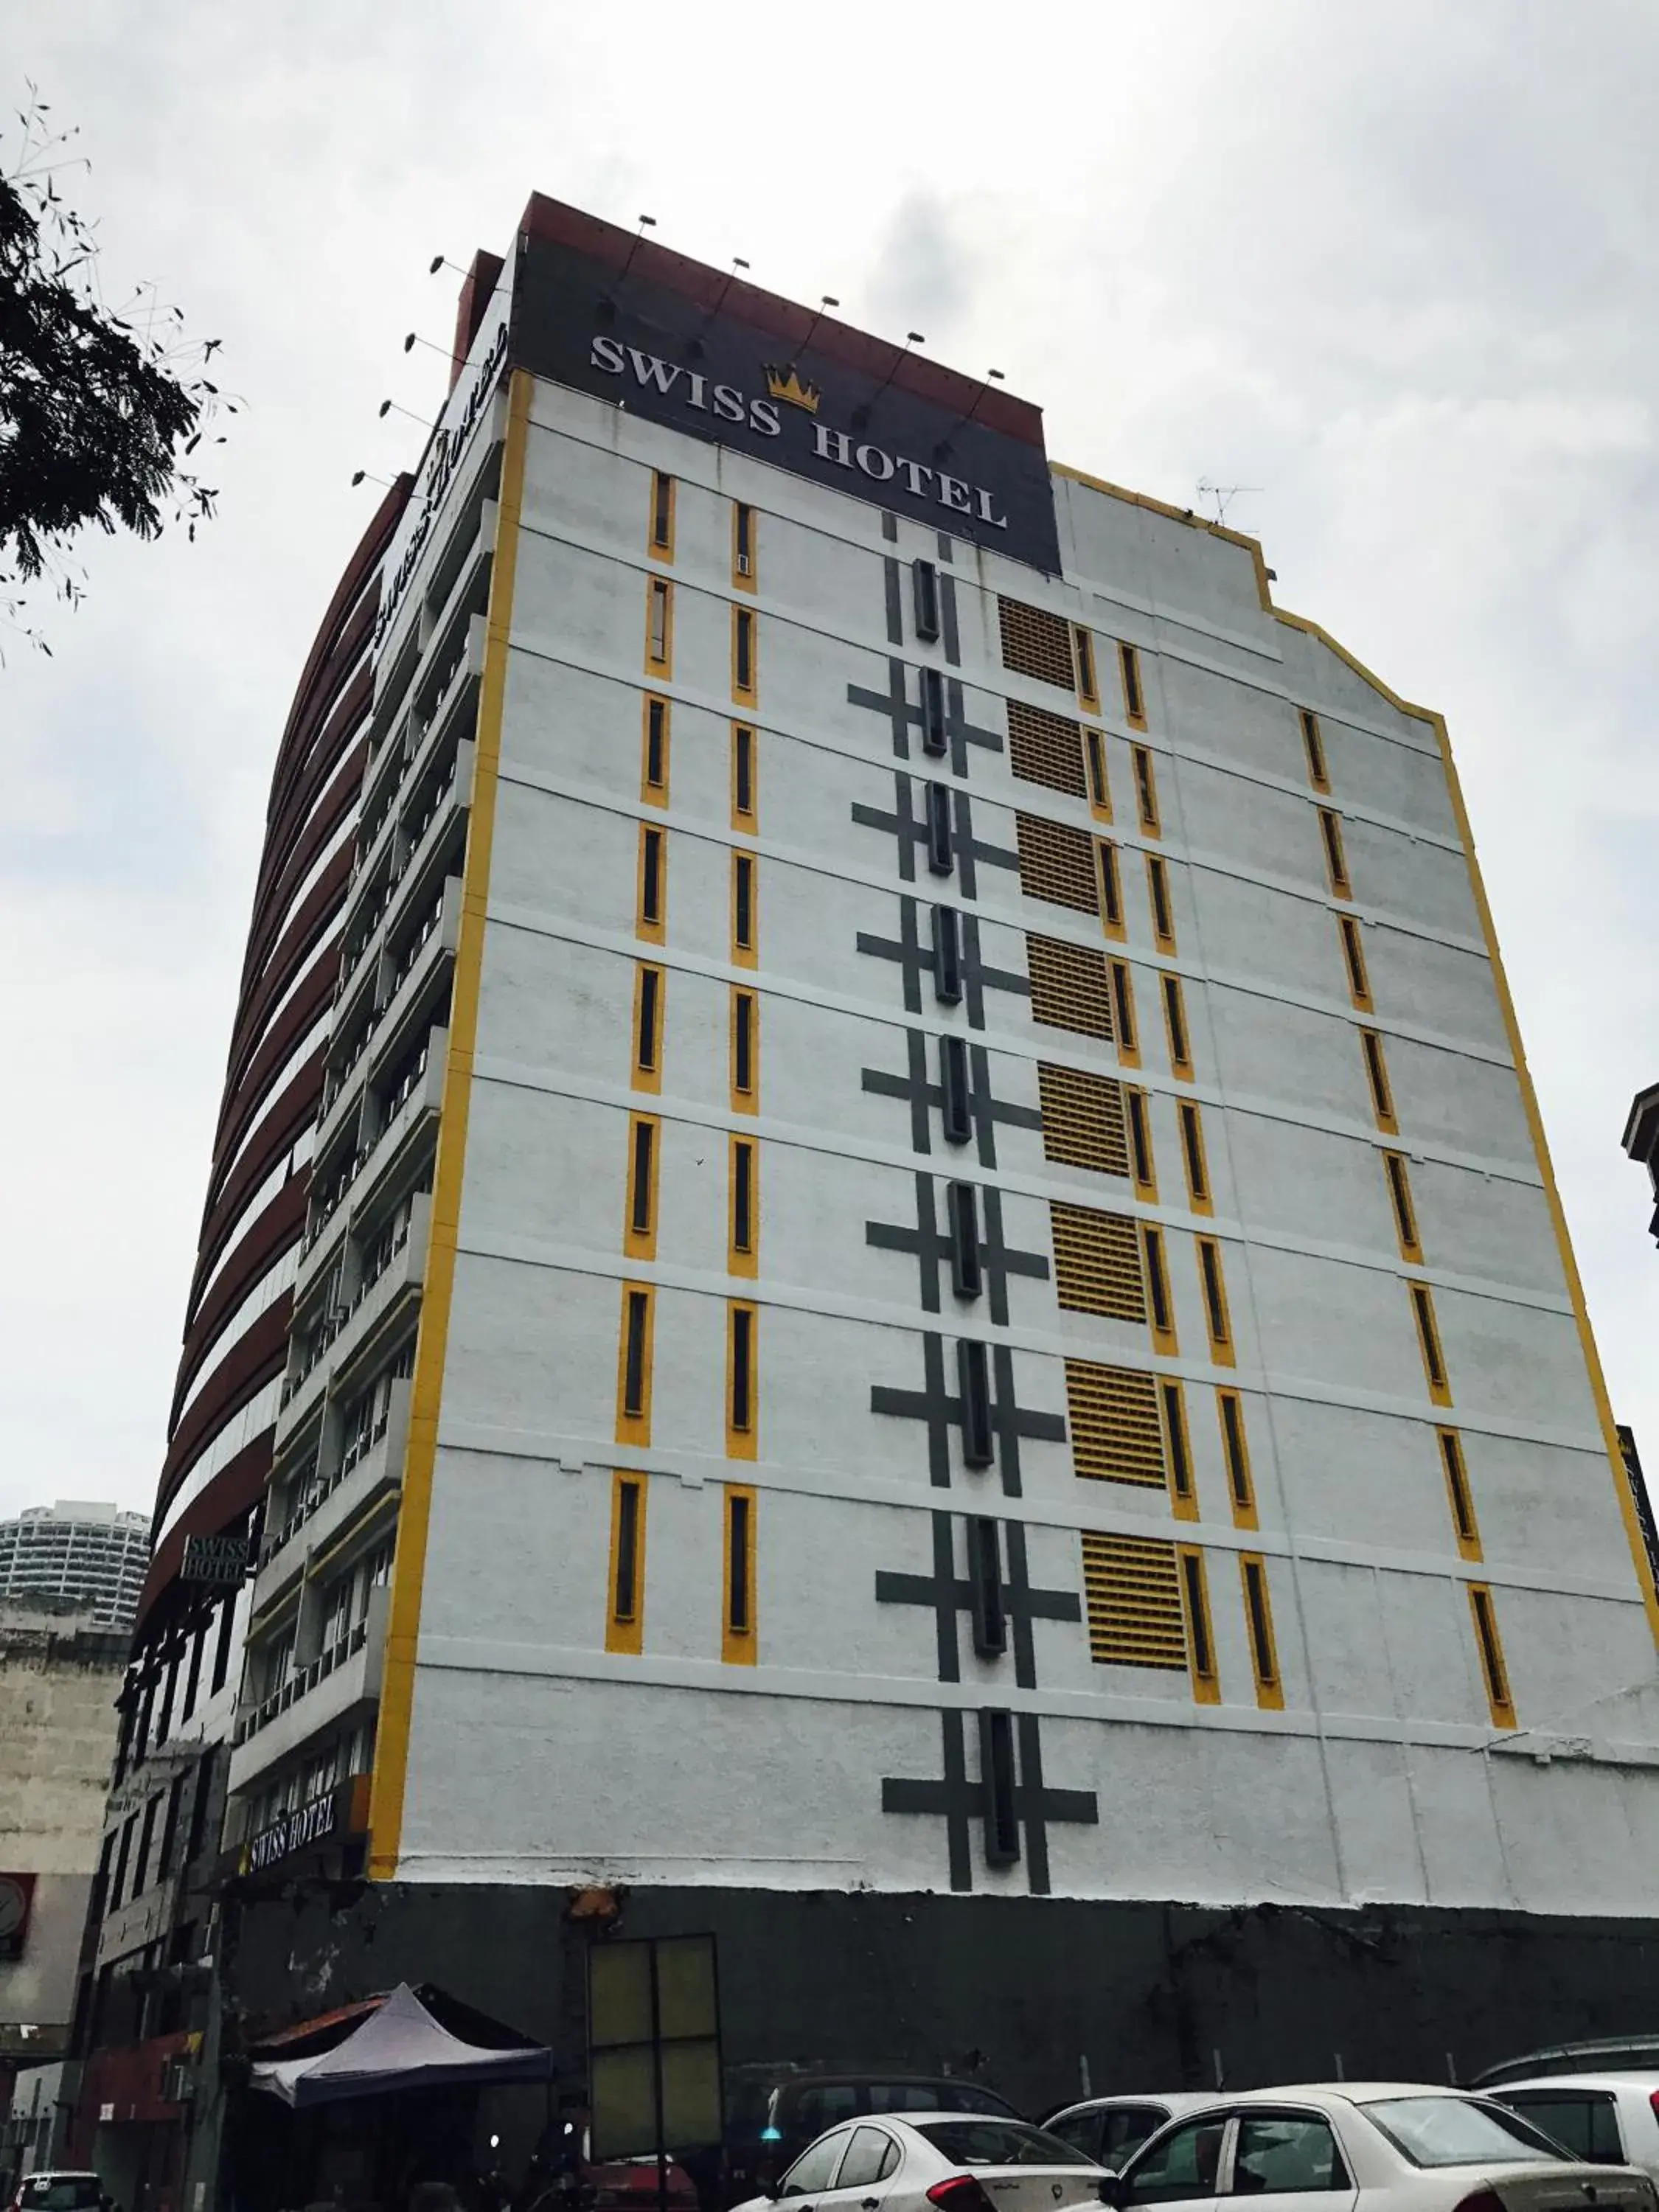 Property building in Swiss Hotel Kuala Lumpur